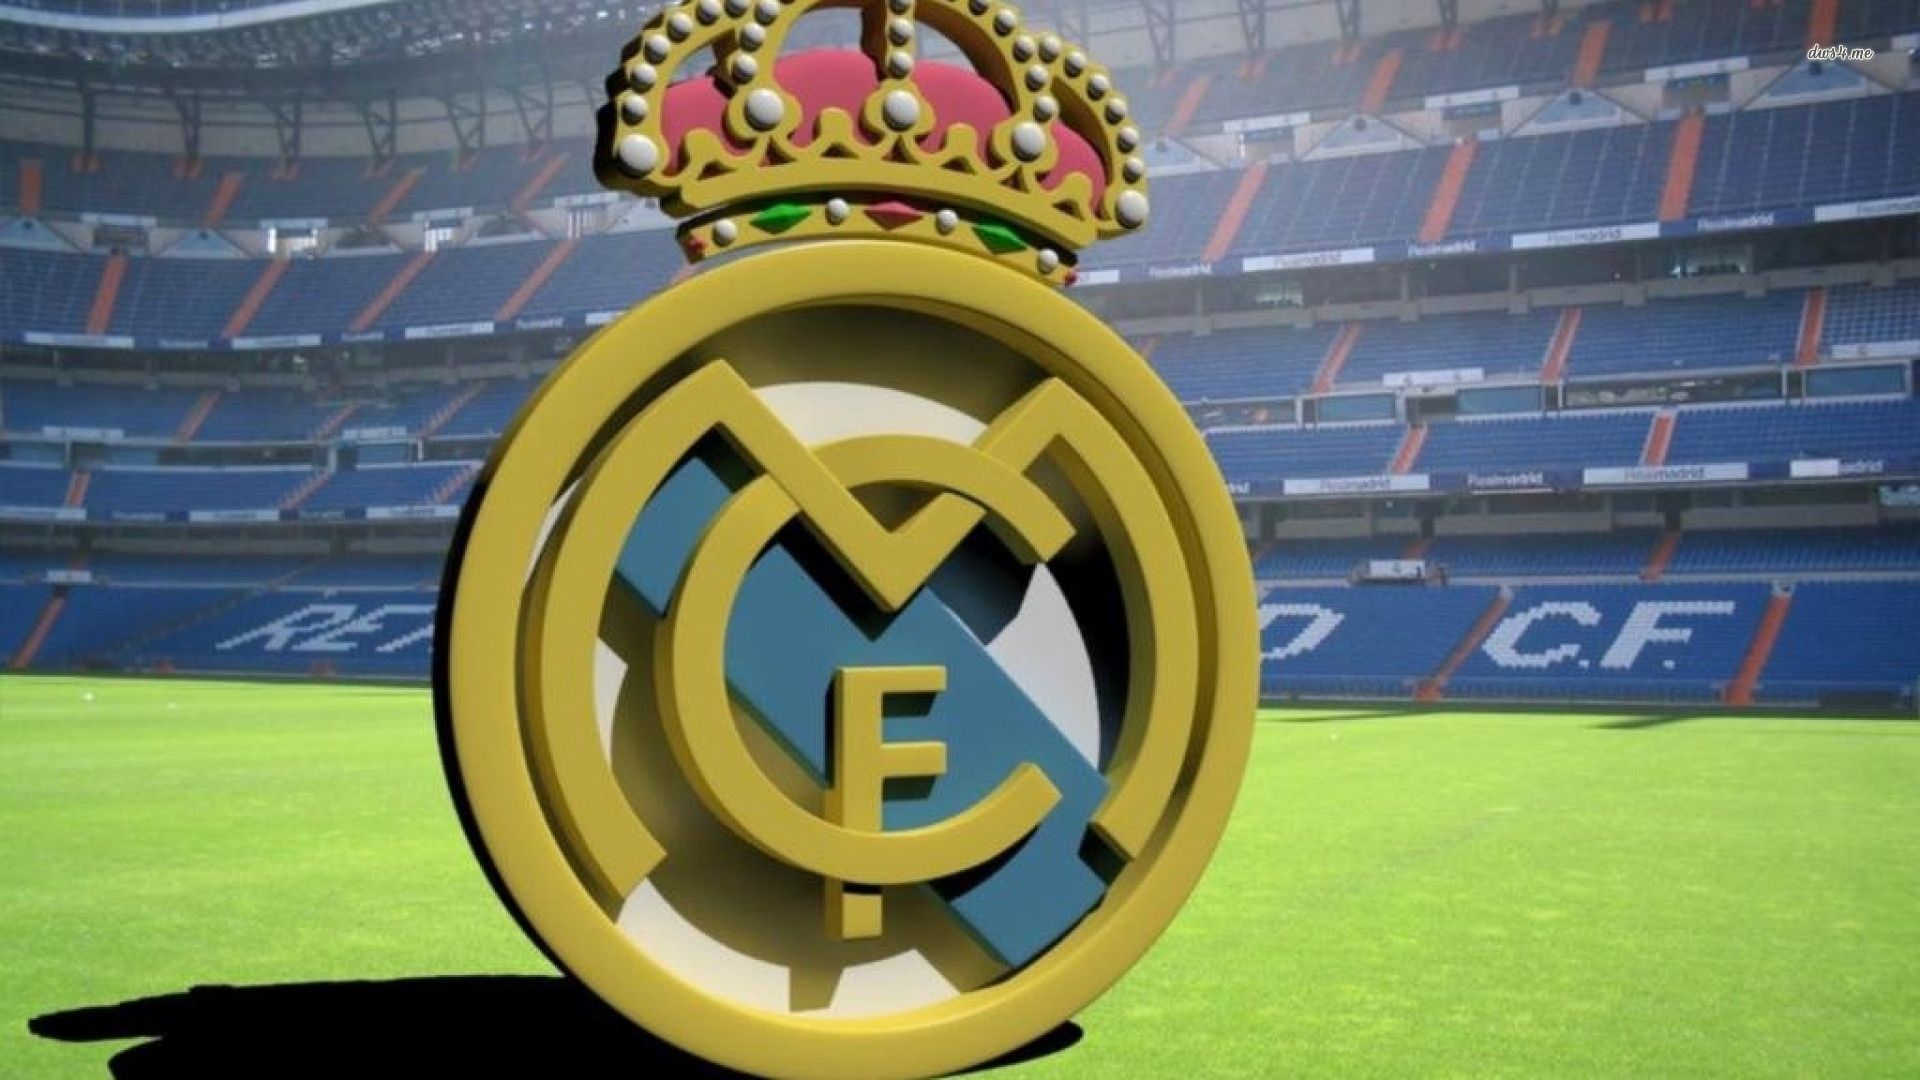 Real Madrid Team Photo Wallpaper HD. Real madrid logo wallpaper, Real madrid wallpaper, Real madrid logo